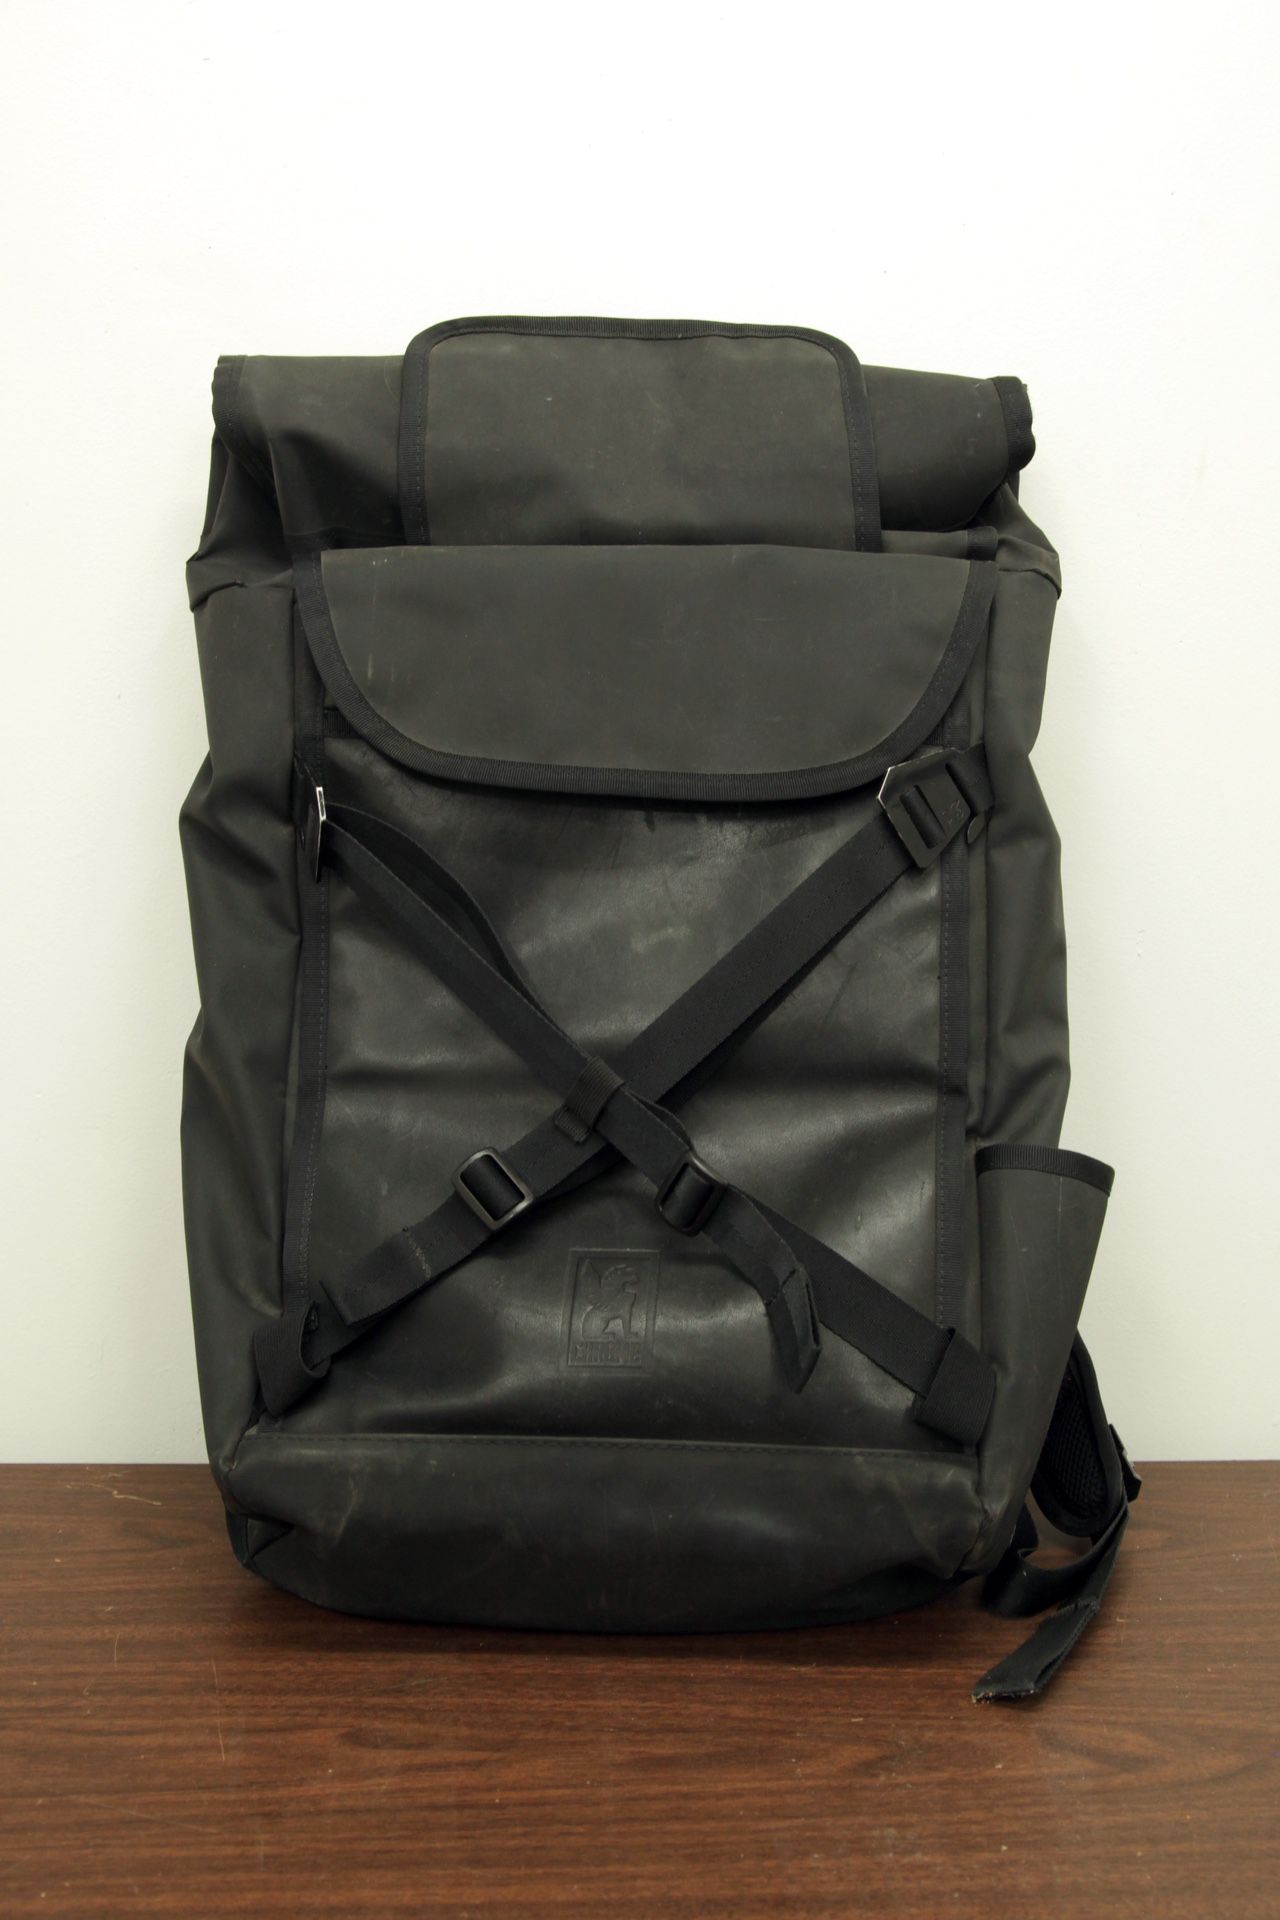 Chrome Industries Bravo 2.0 Black Backpack